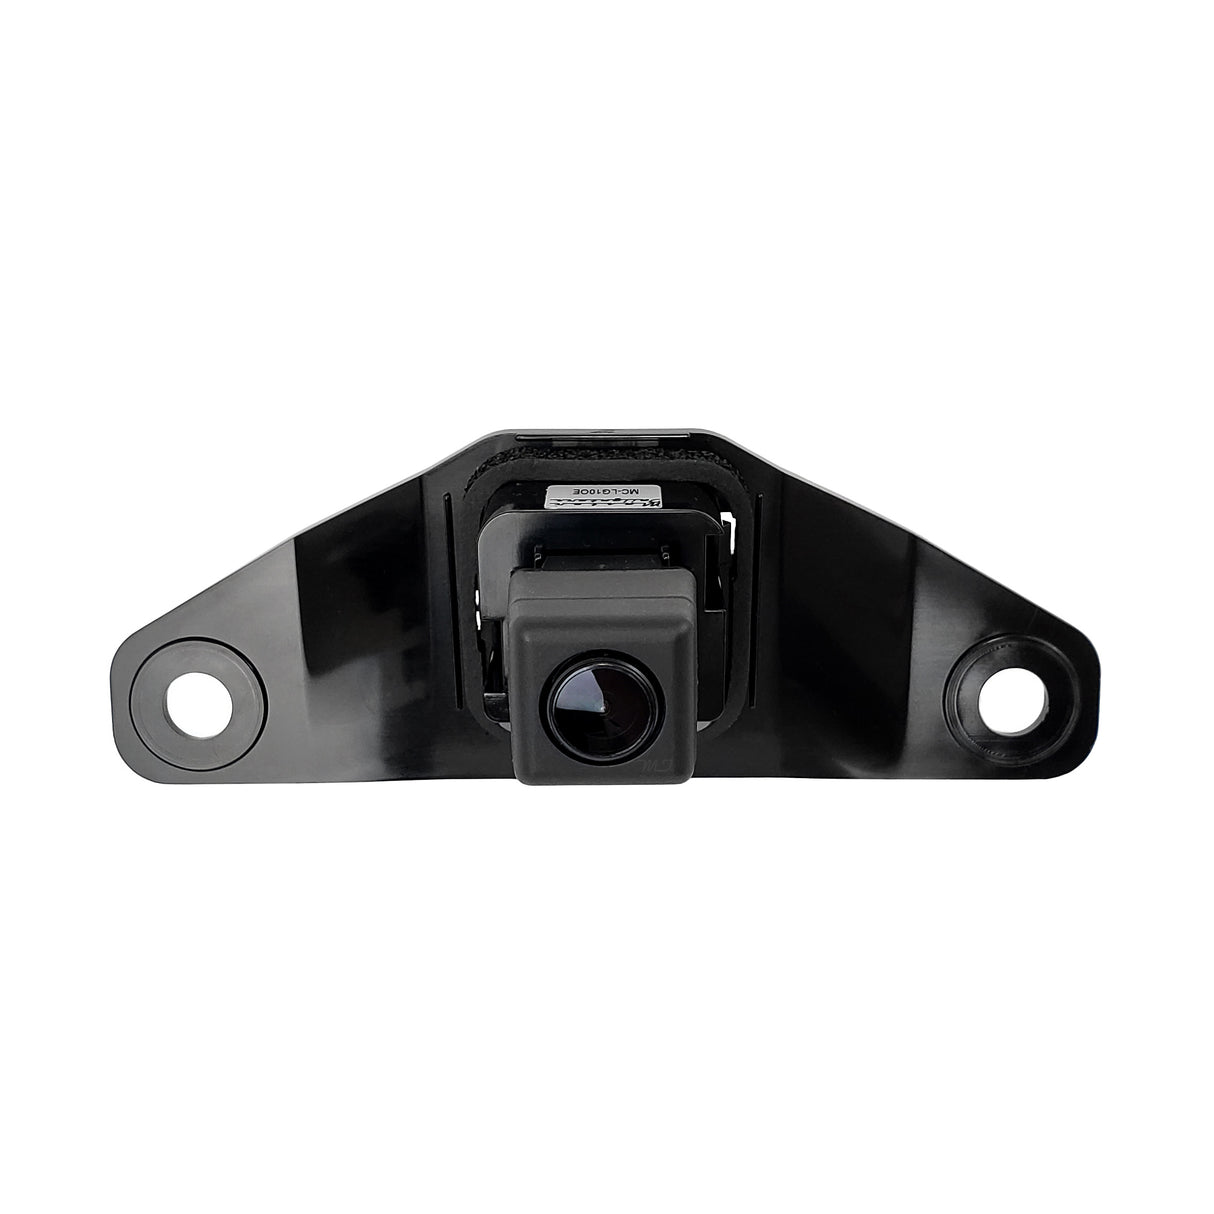 Lexus GX 460 (2010-2013) OEM Replacement Backup Camera OE Part # 86790-60120 (8679060120), 86790-60121 (8679060121)